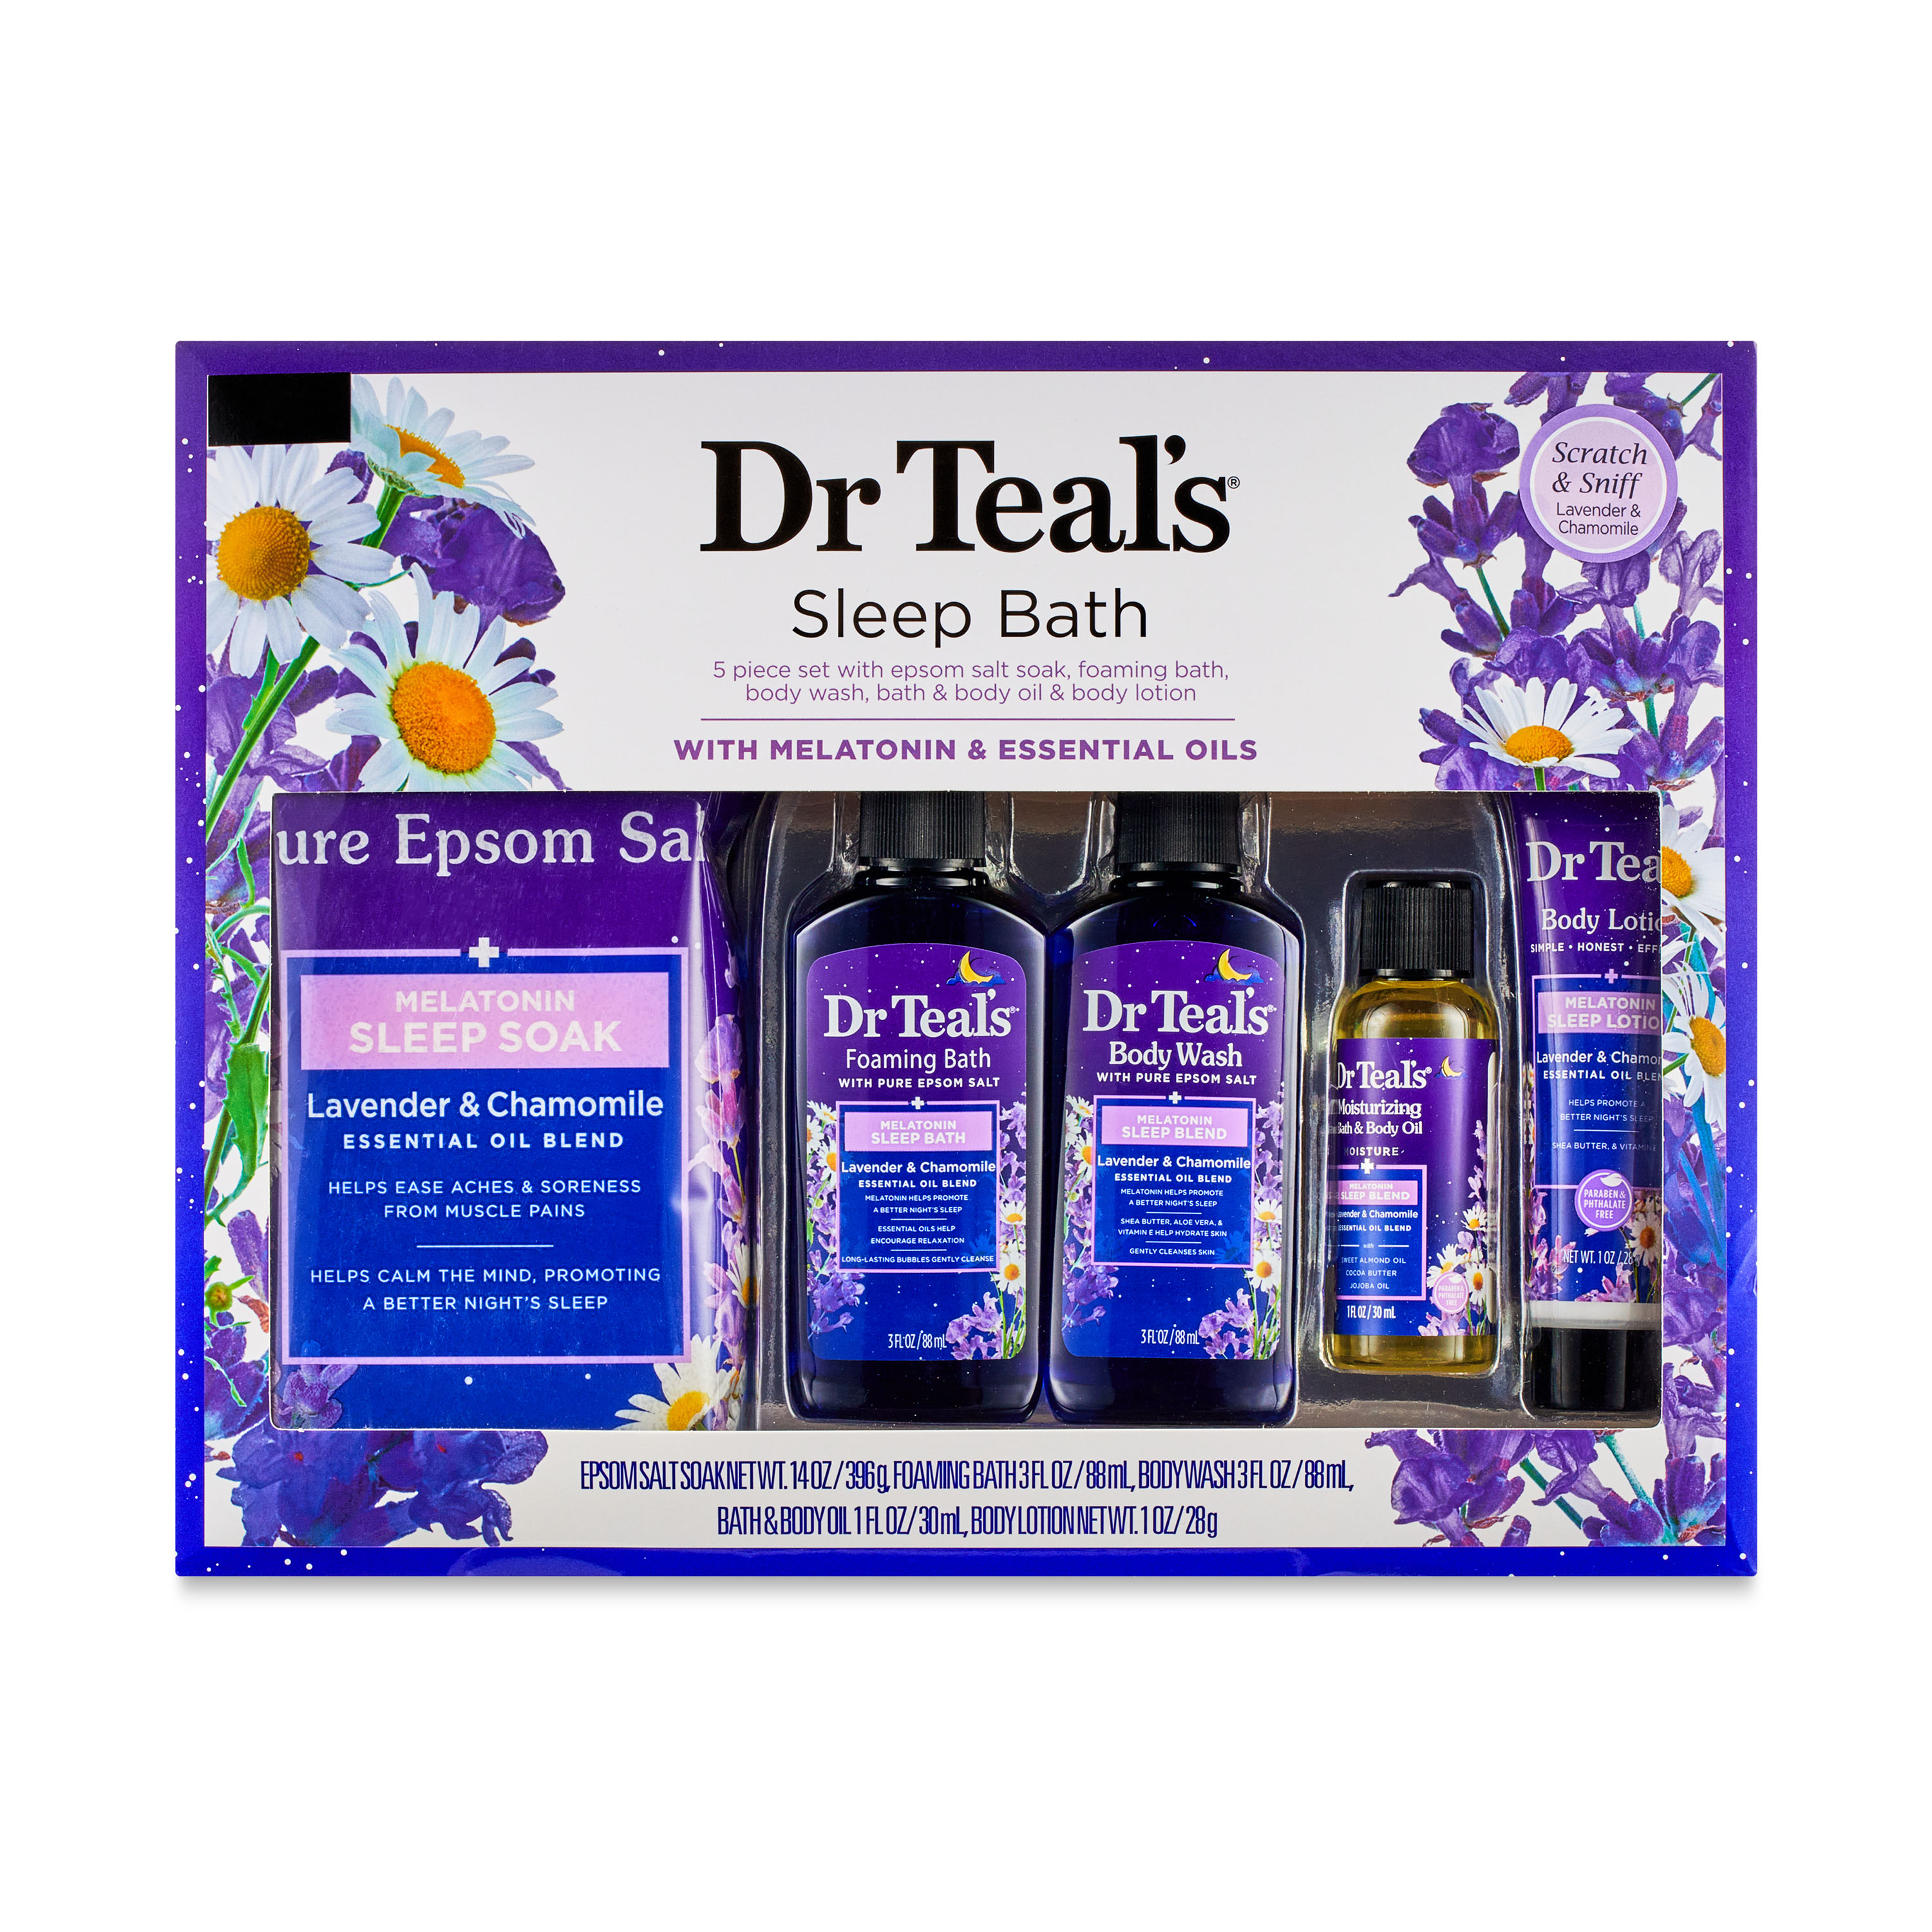 Dr Teal's Sleep Bath with Melatonin & Essential Oils 5-Piece Set - image 1 of 5